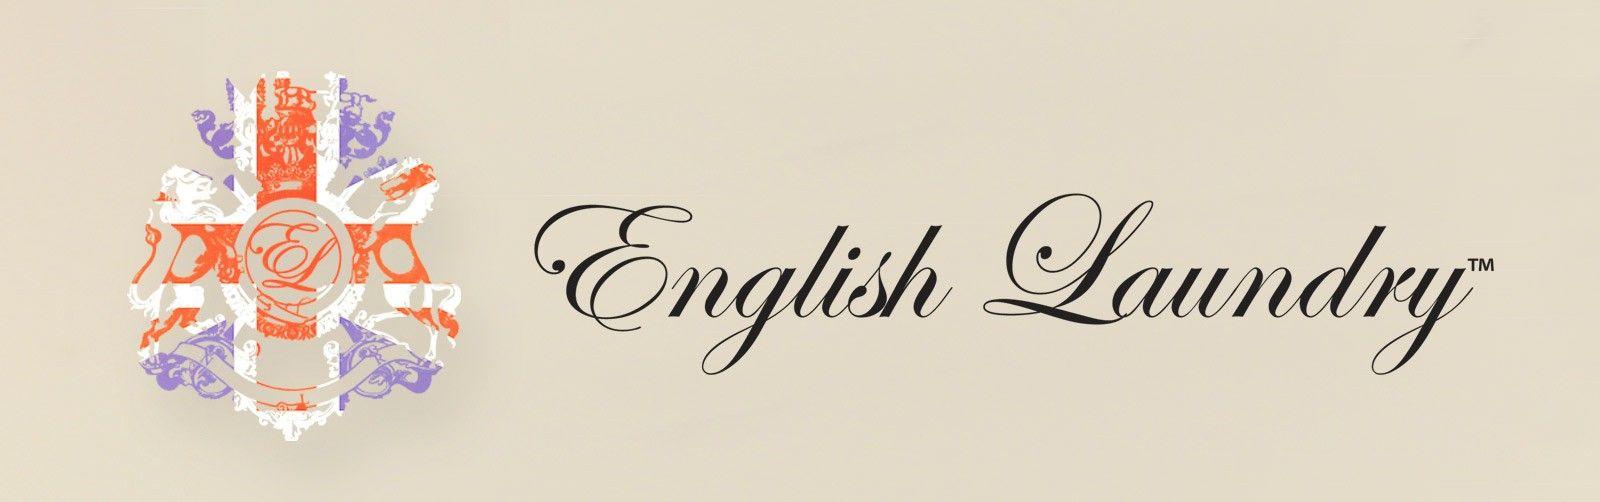 English Laundry Logo - C&F Perfumery